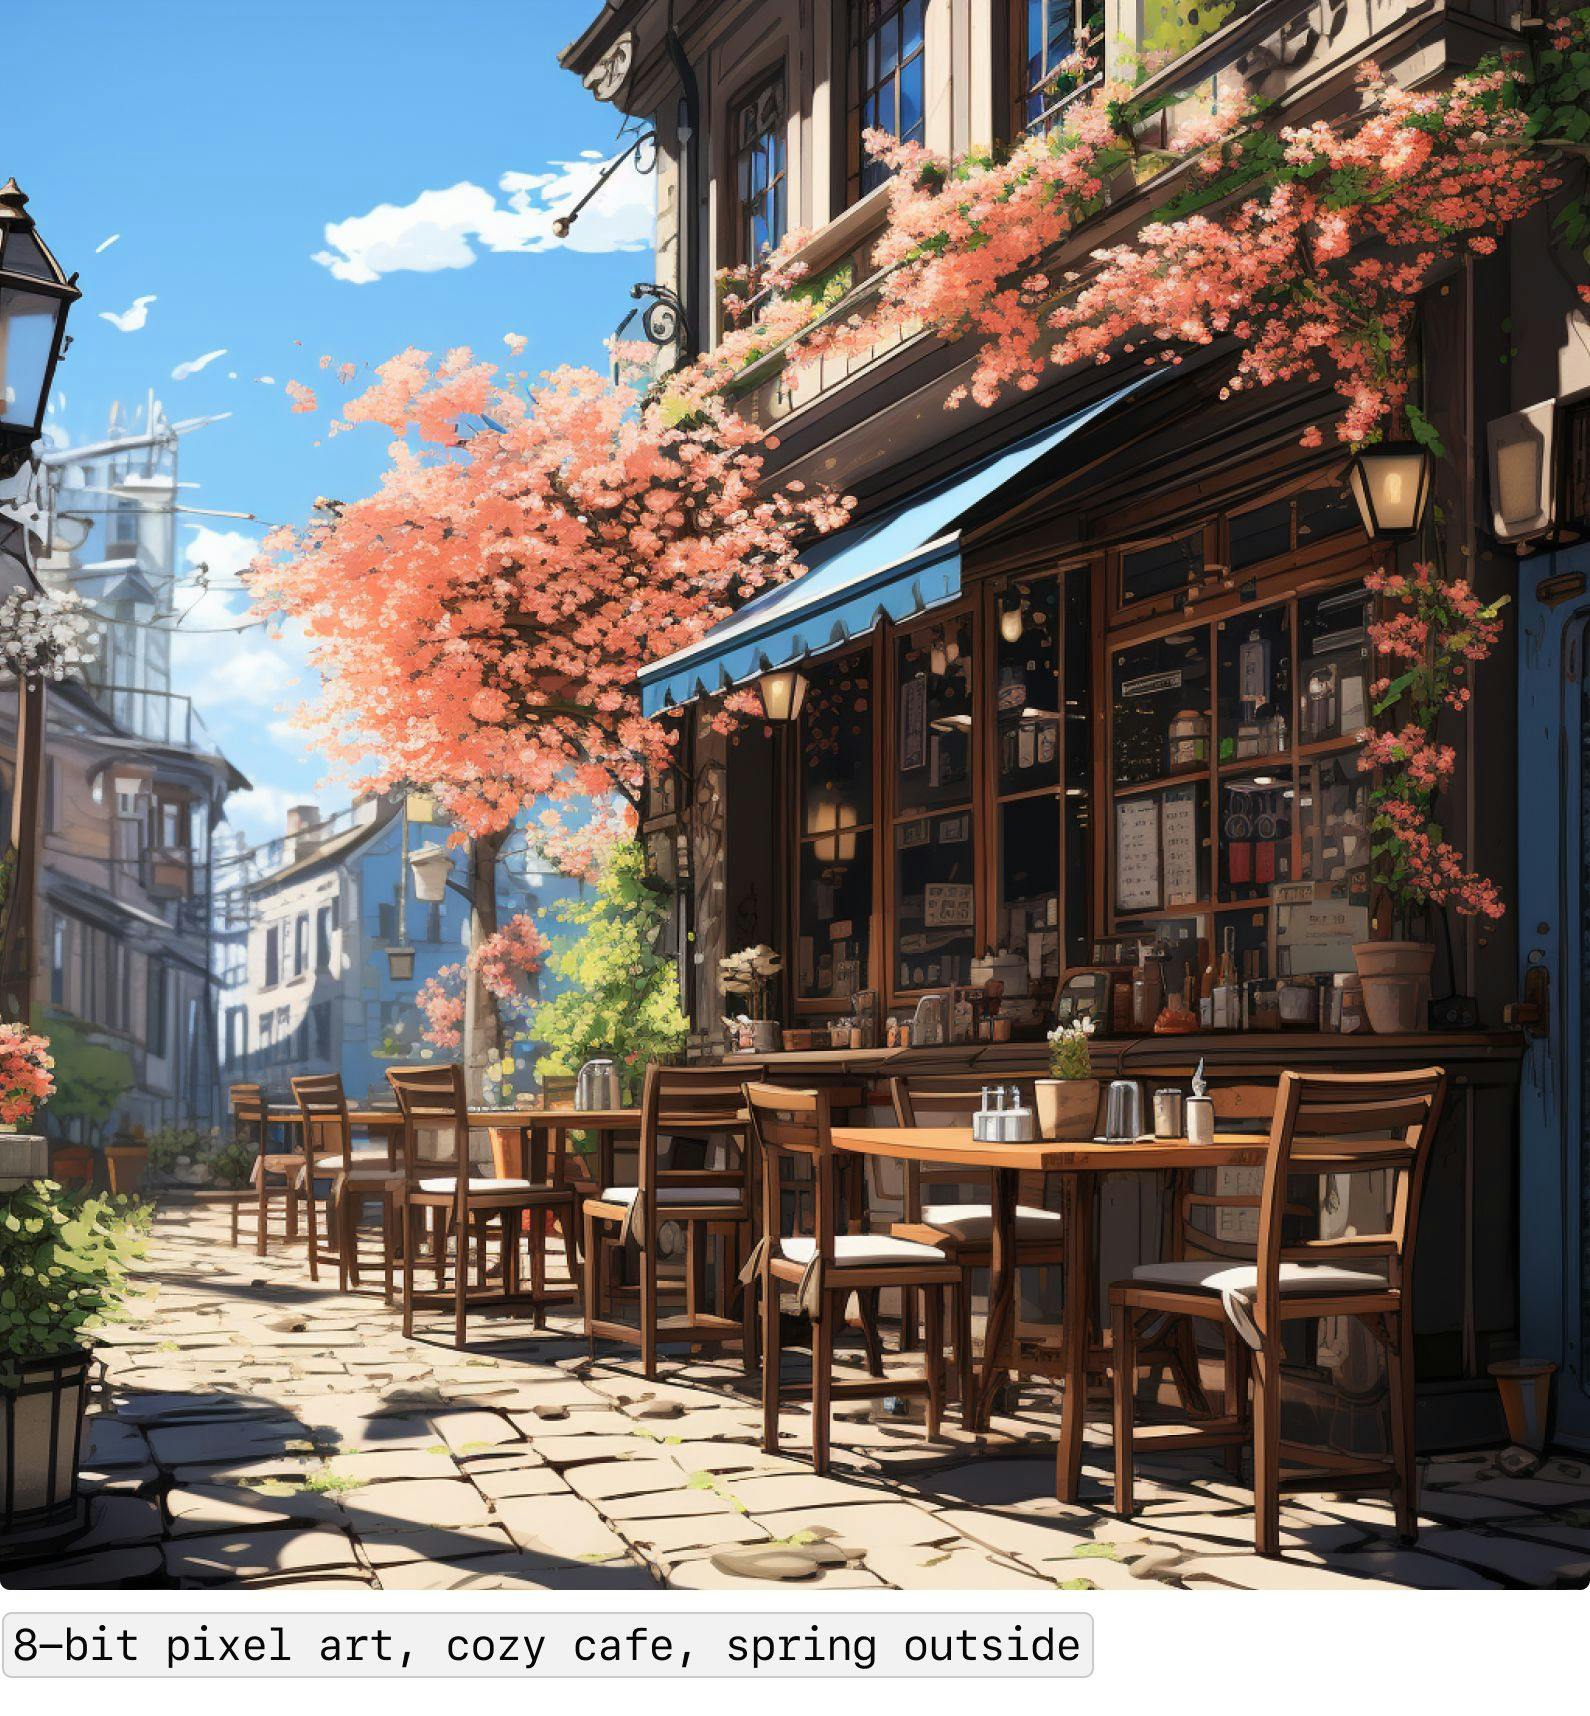 8-bit pixel art, cozy cafe, spring outside